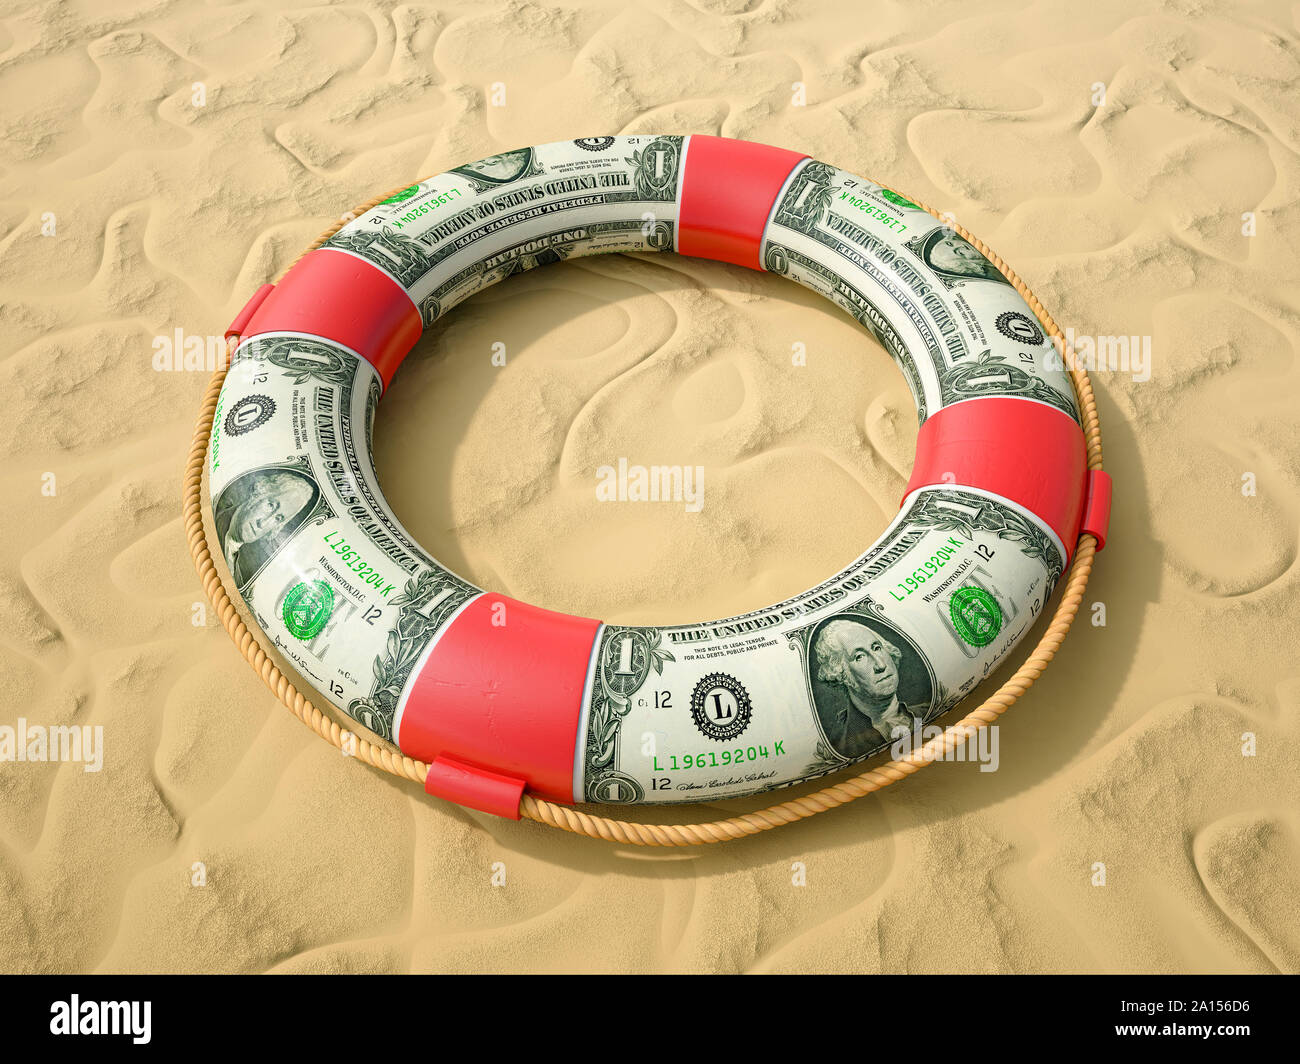 Lifebelt, life ring preserver made of US dollar bills on sand Stock Photo